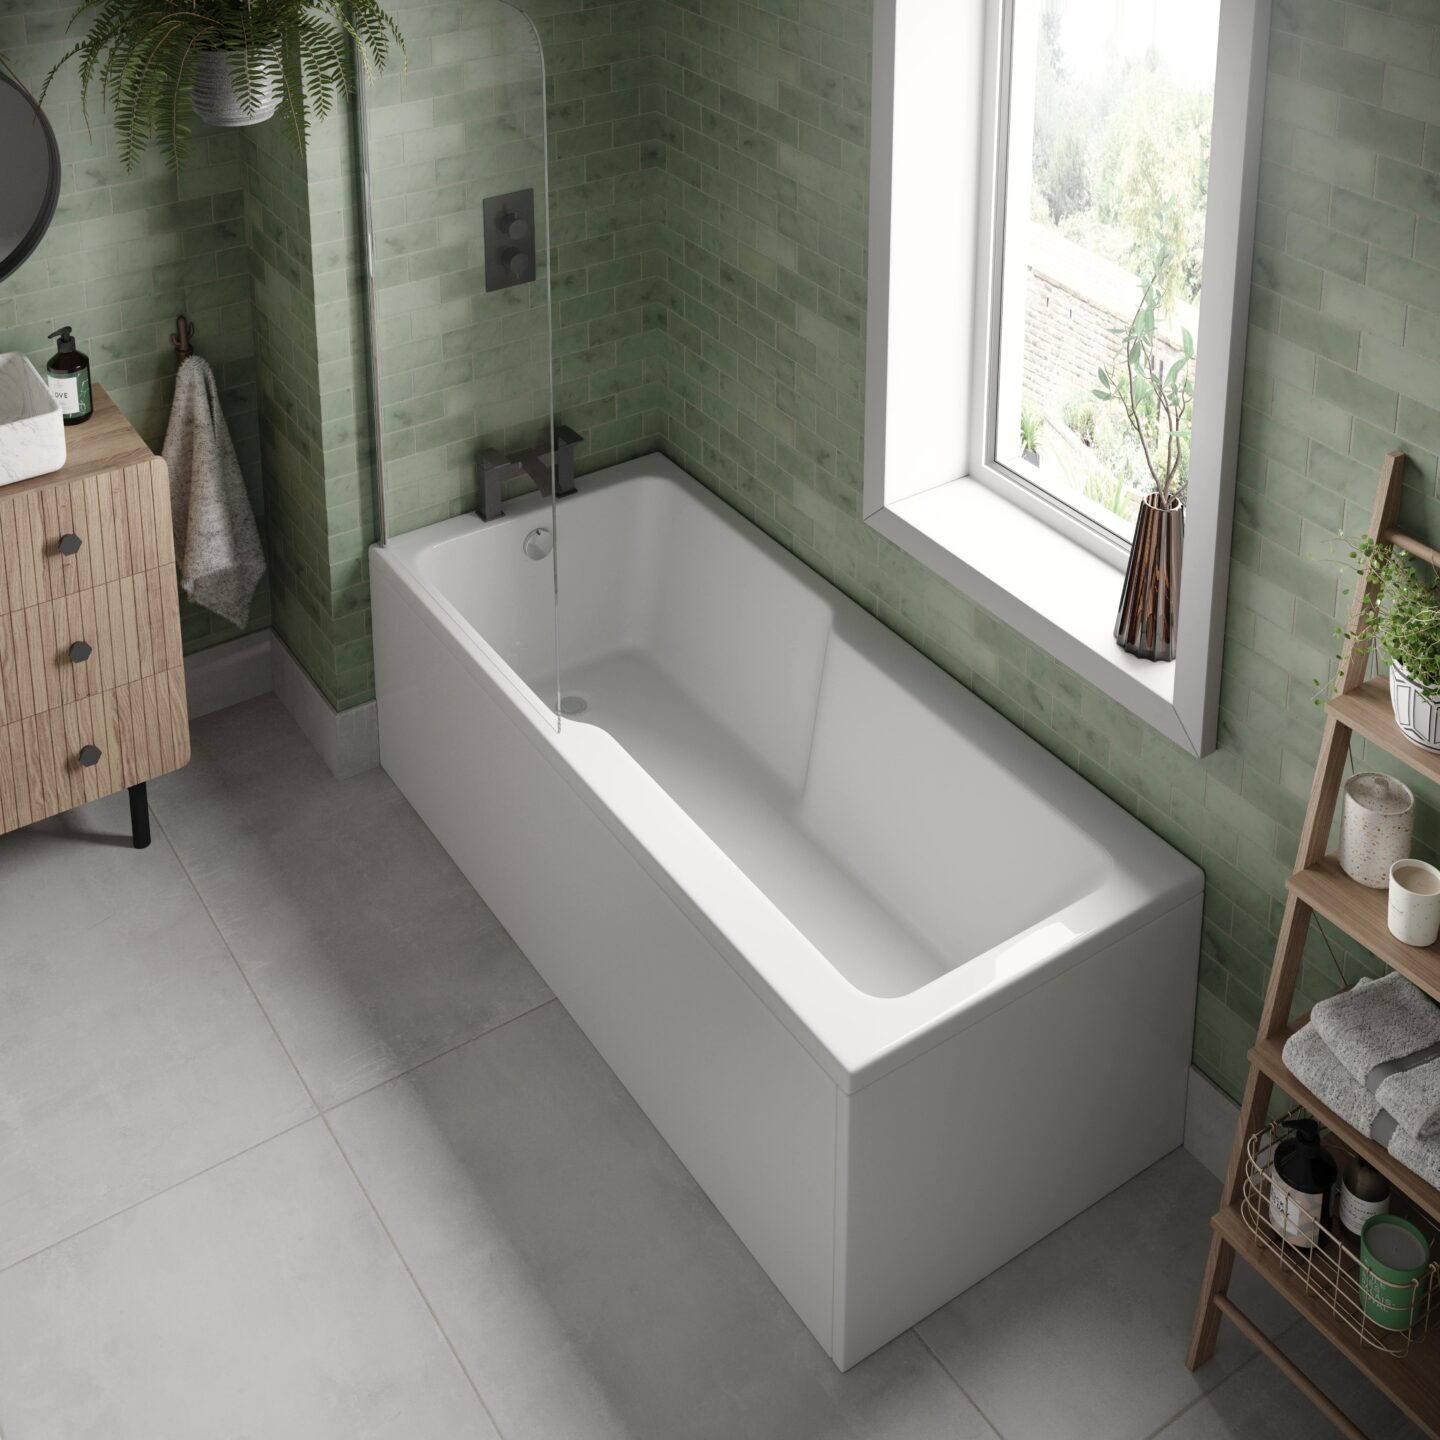 Trojan's Evolve shower bath in a green tiled bathroom